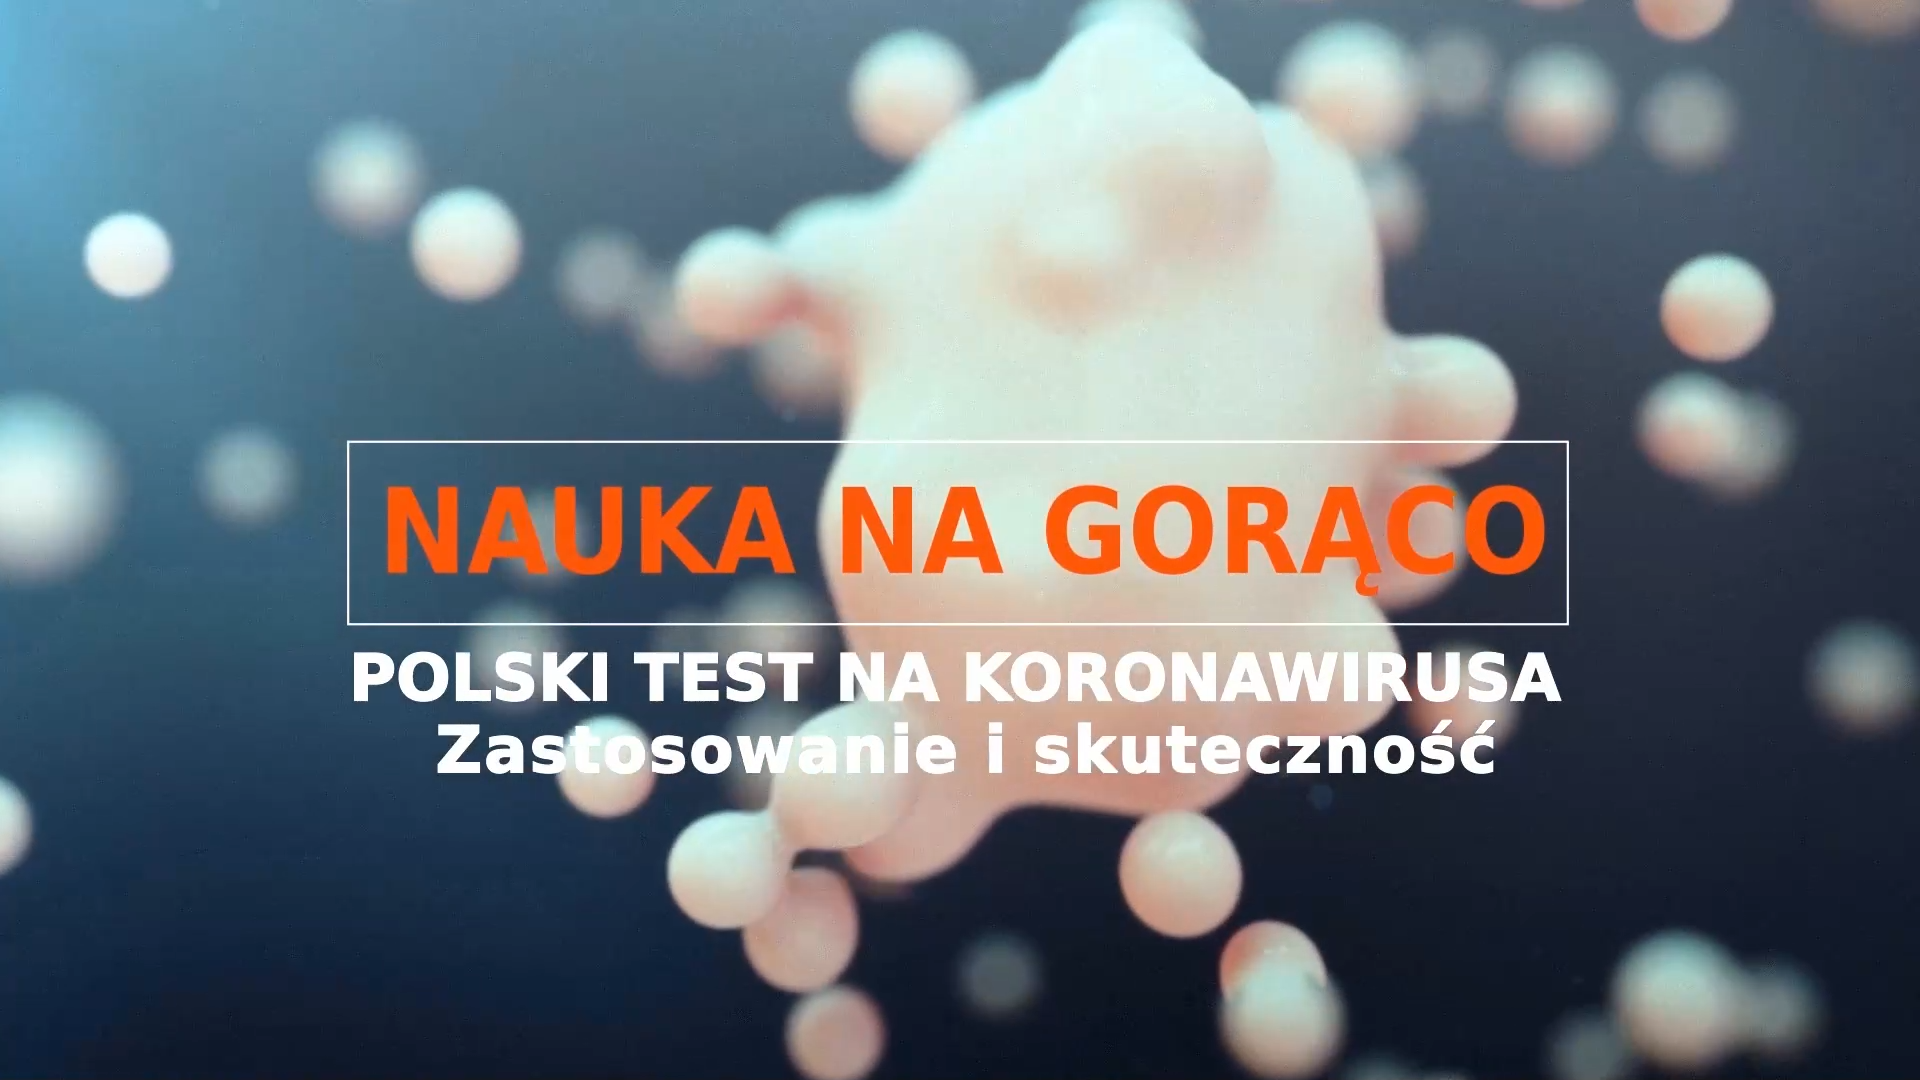 PIONIER.TV “Hot science: the first Polish coronavirus test”